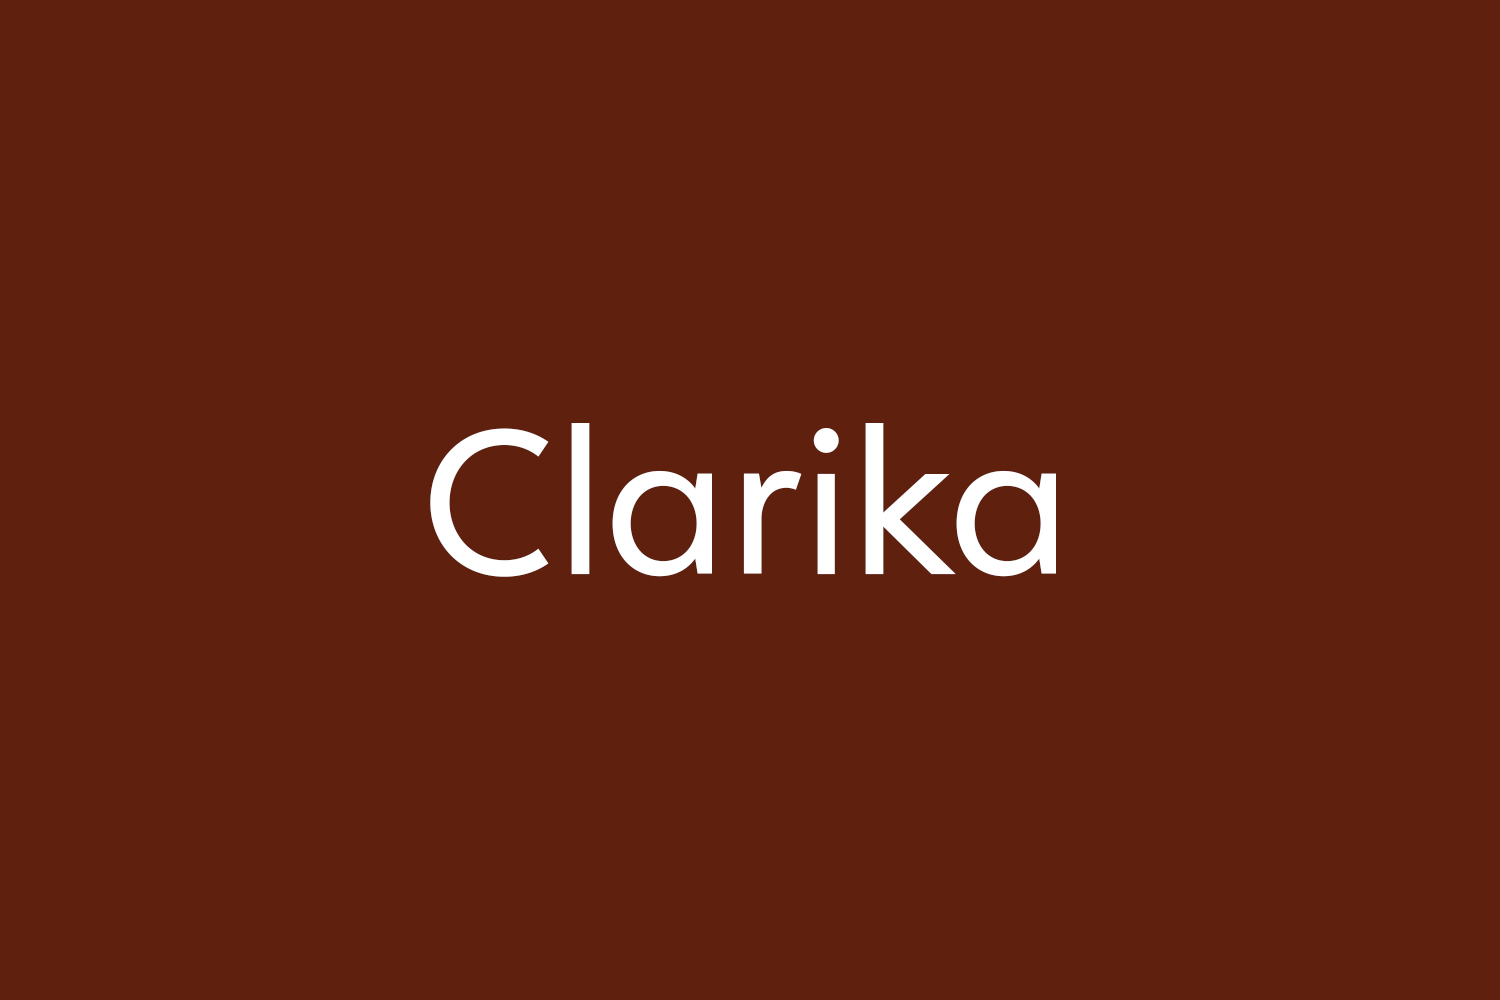 Clarika Pro